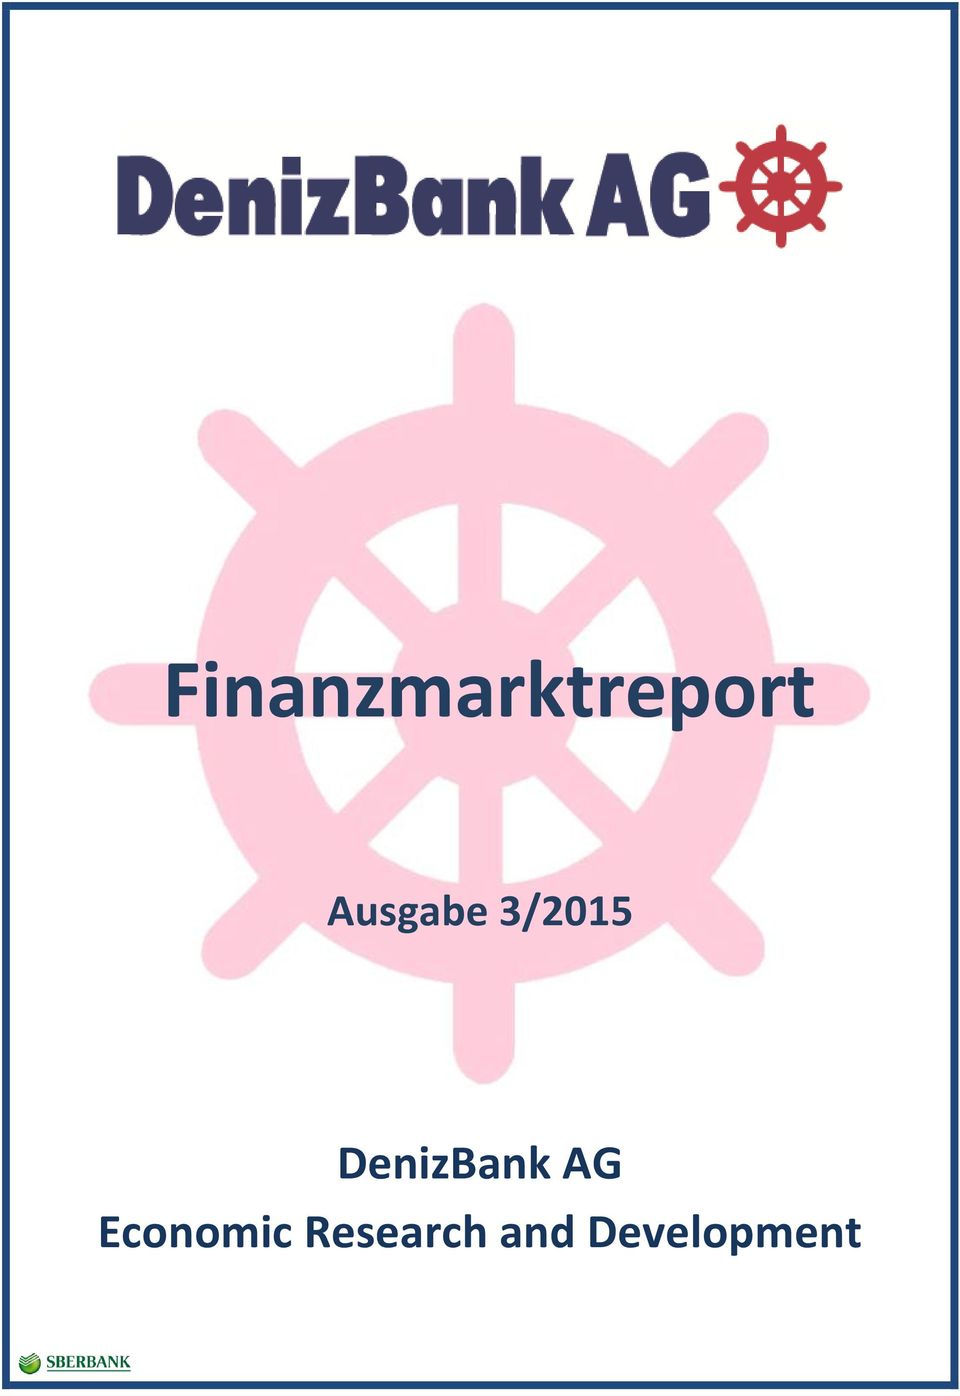 DenizBank AG